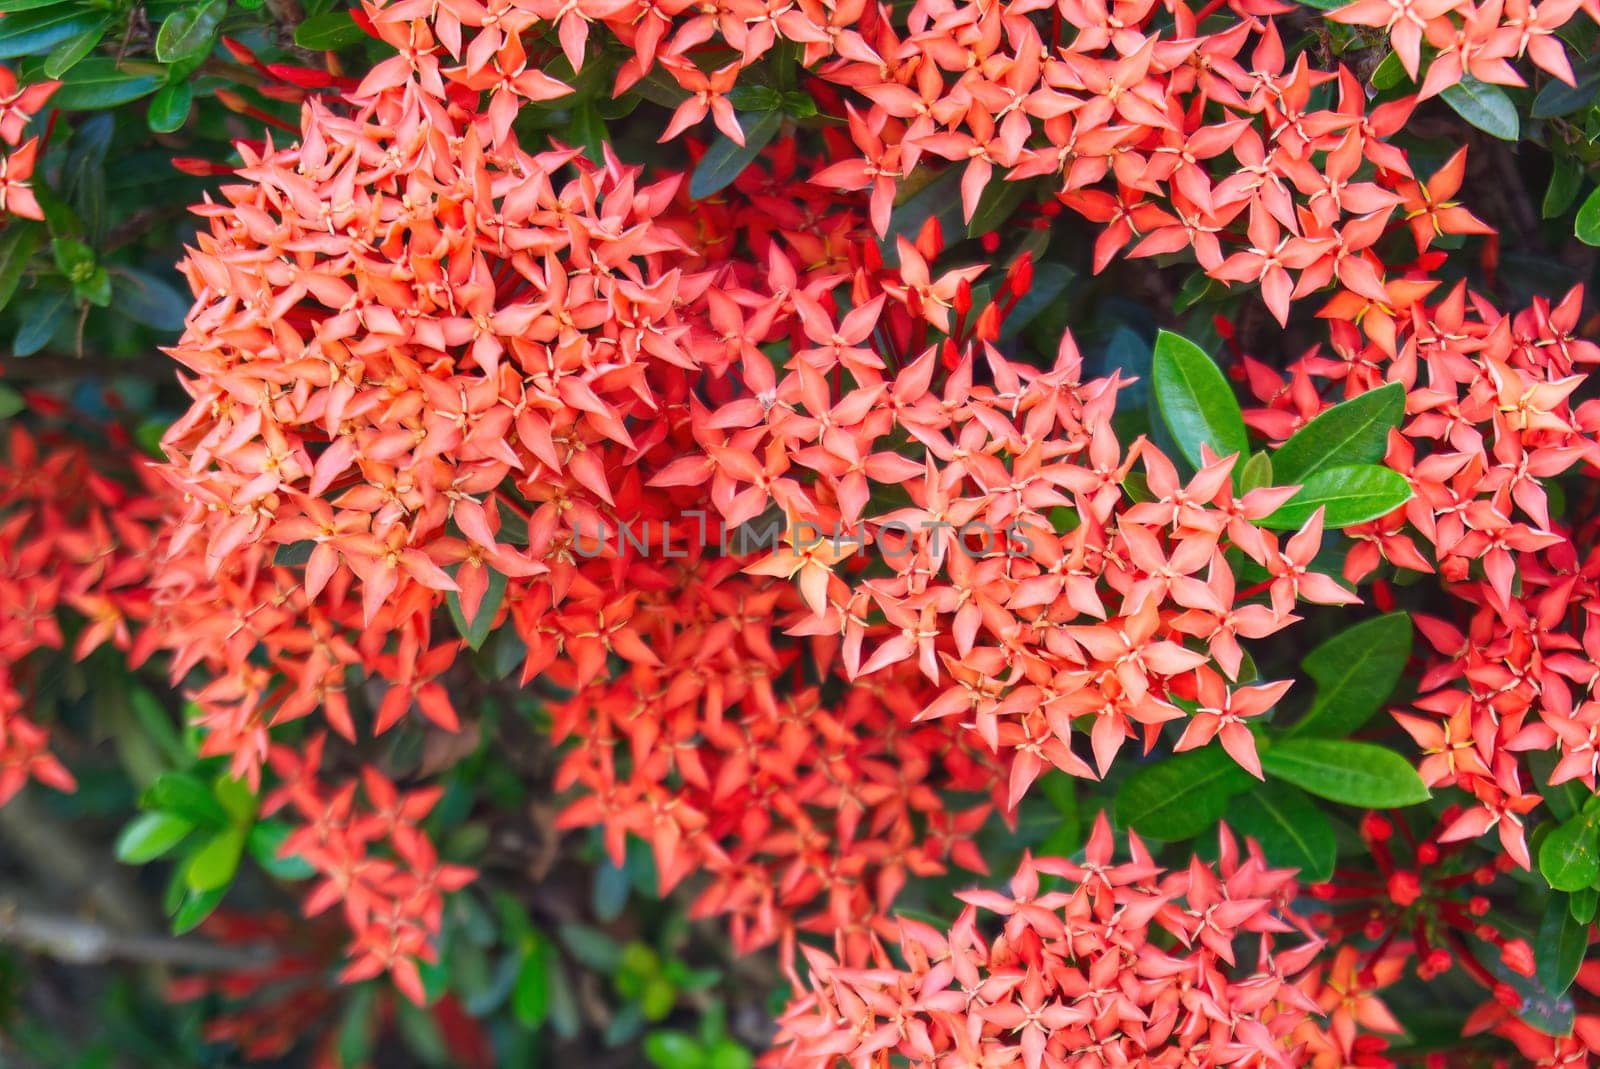 Ixora Chinensis Lamk, Ixora flower, Red spike flower, King Ixora blooming Rubiaceae flower, West Indian Jasmine by capple